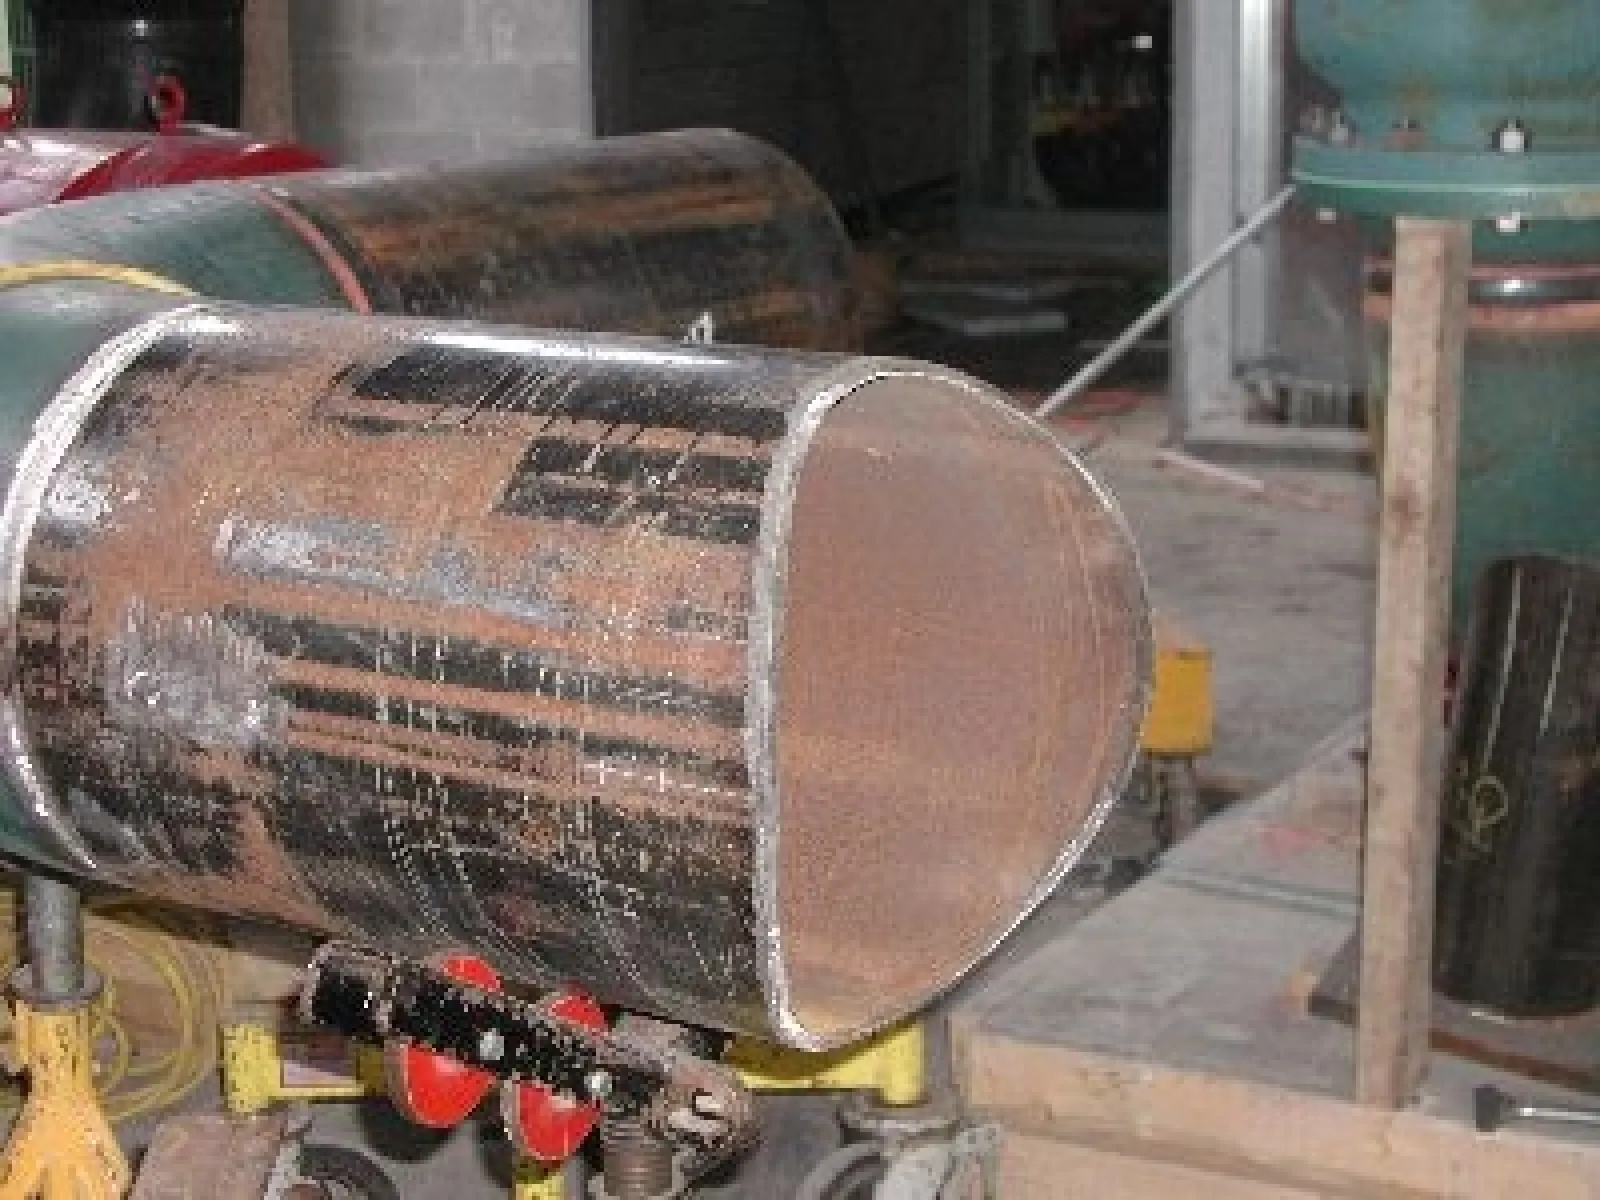 a large metal cylinder